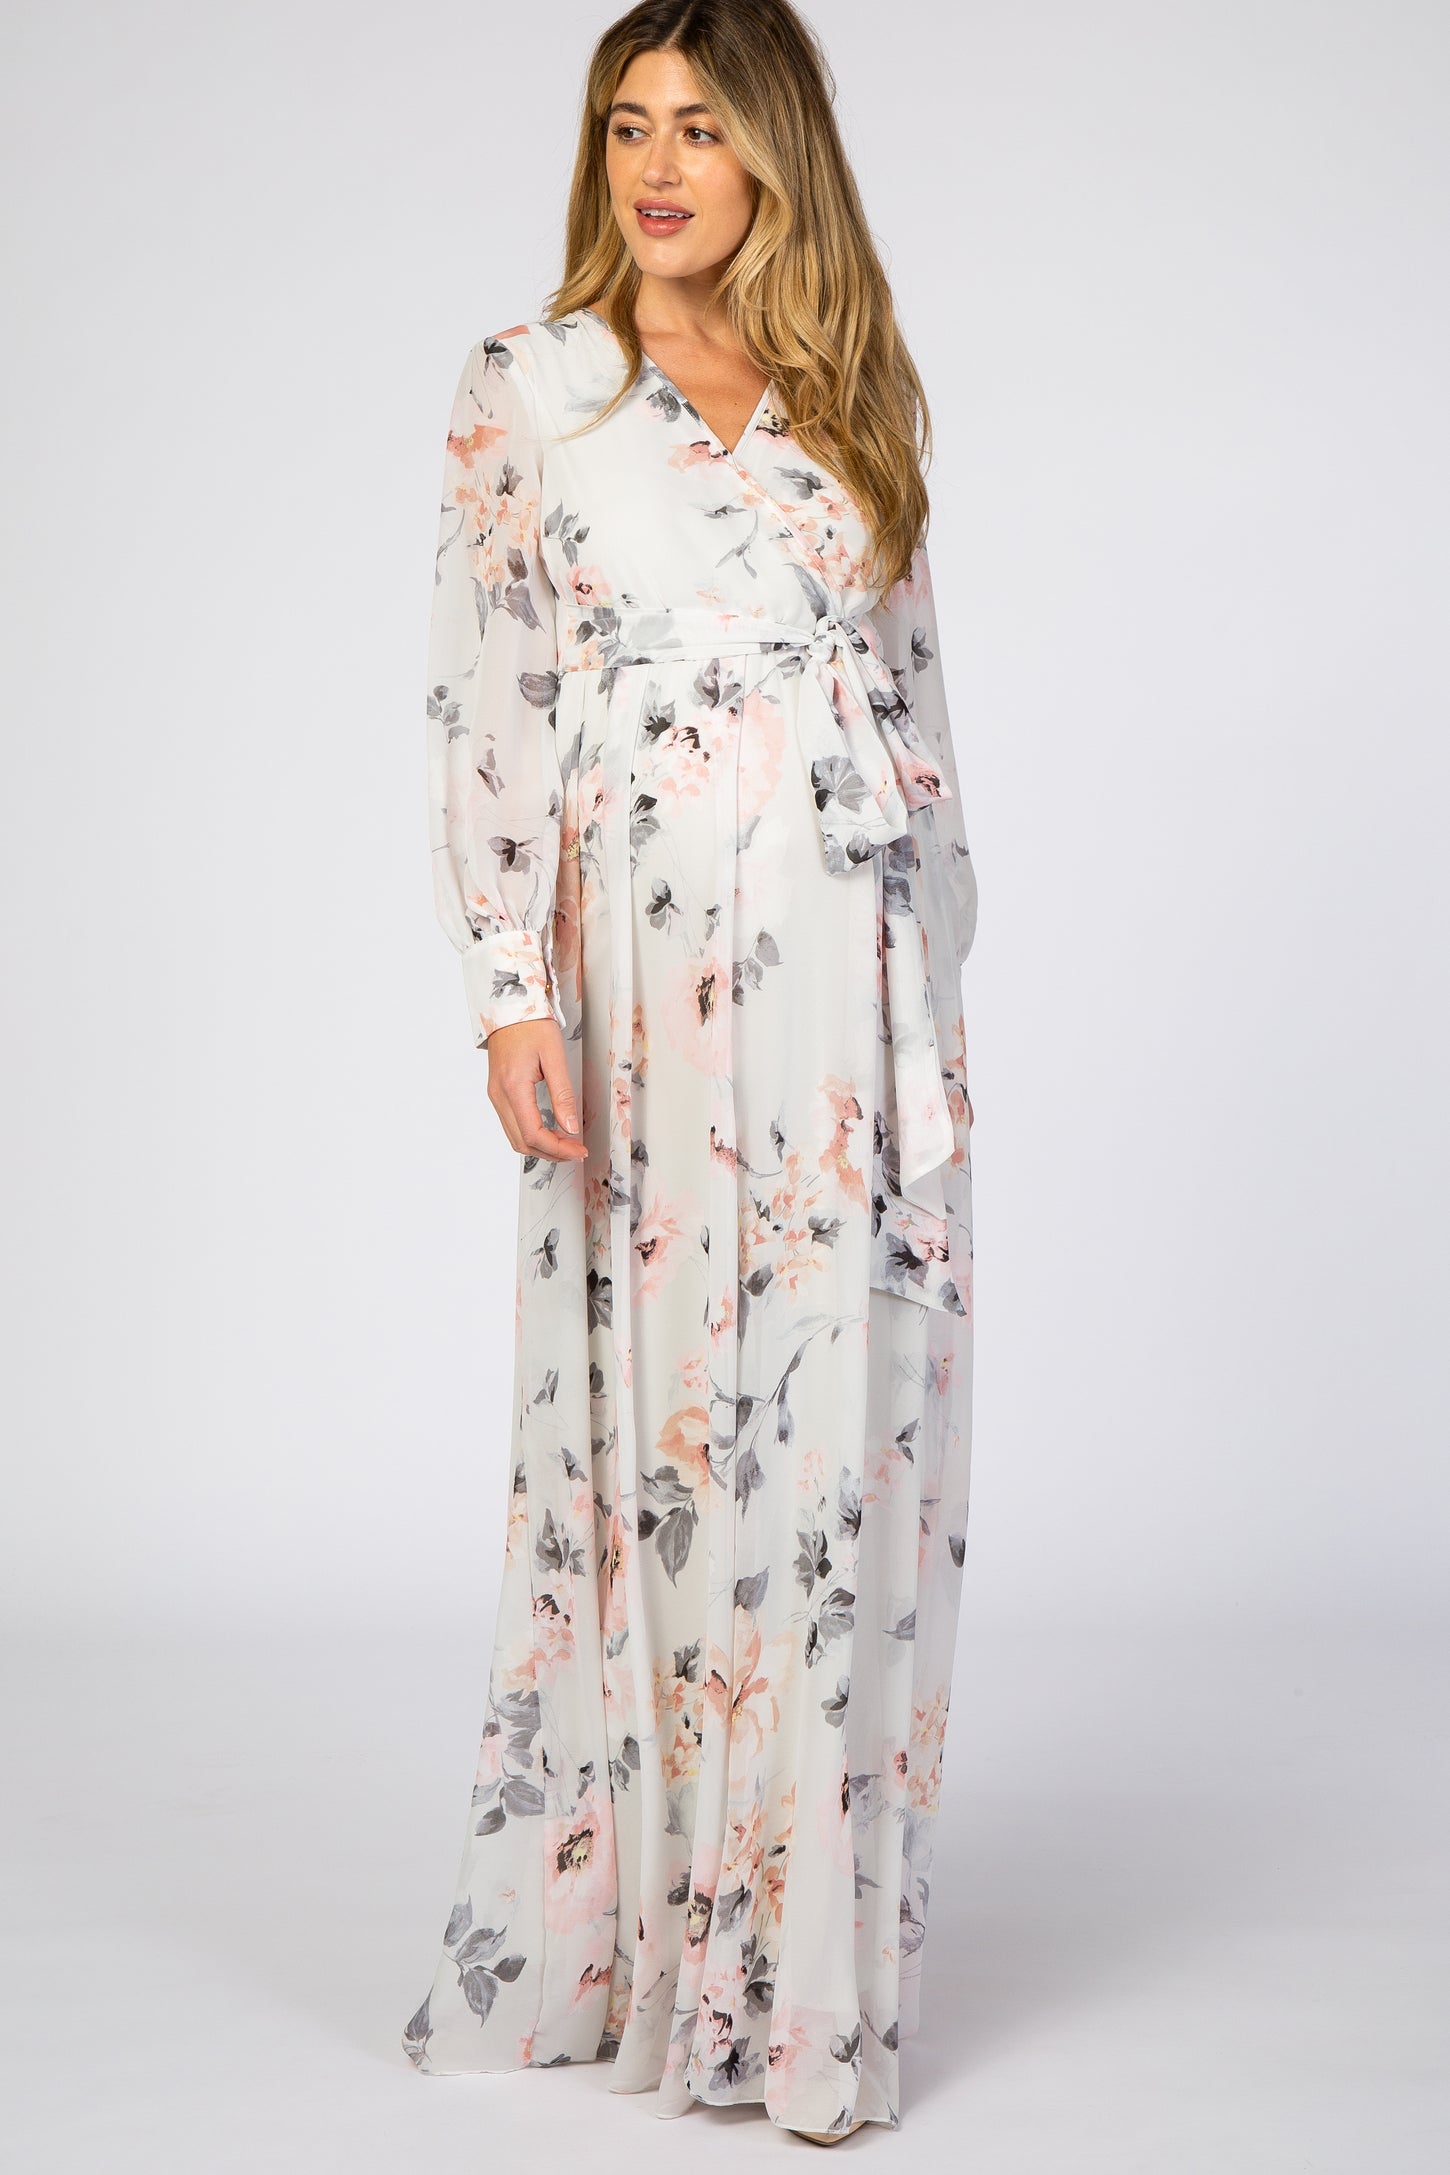 PinkBlush Ivory Floral Sash Tie Maternity/Nursing Maxi Dress